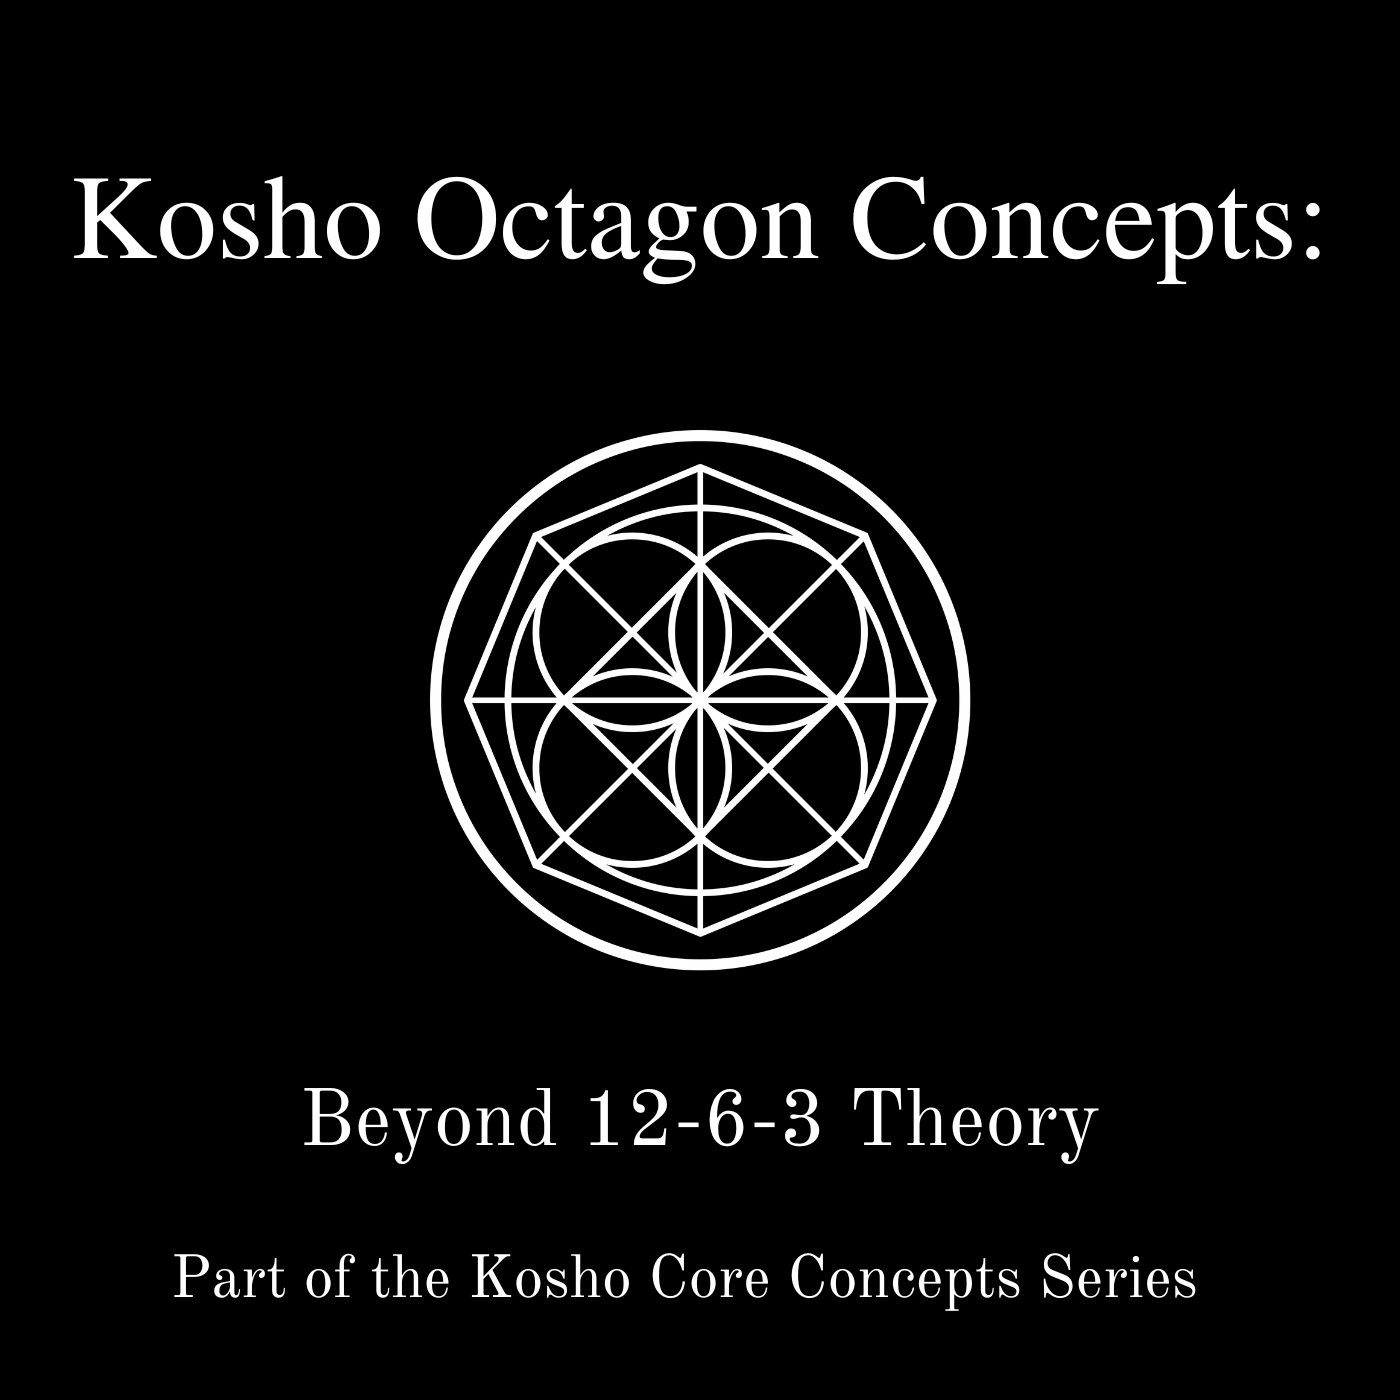 * Kosho Octagon Concepts